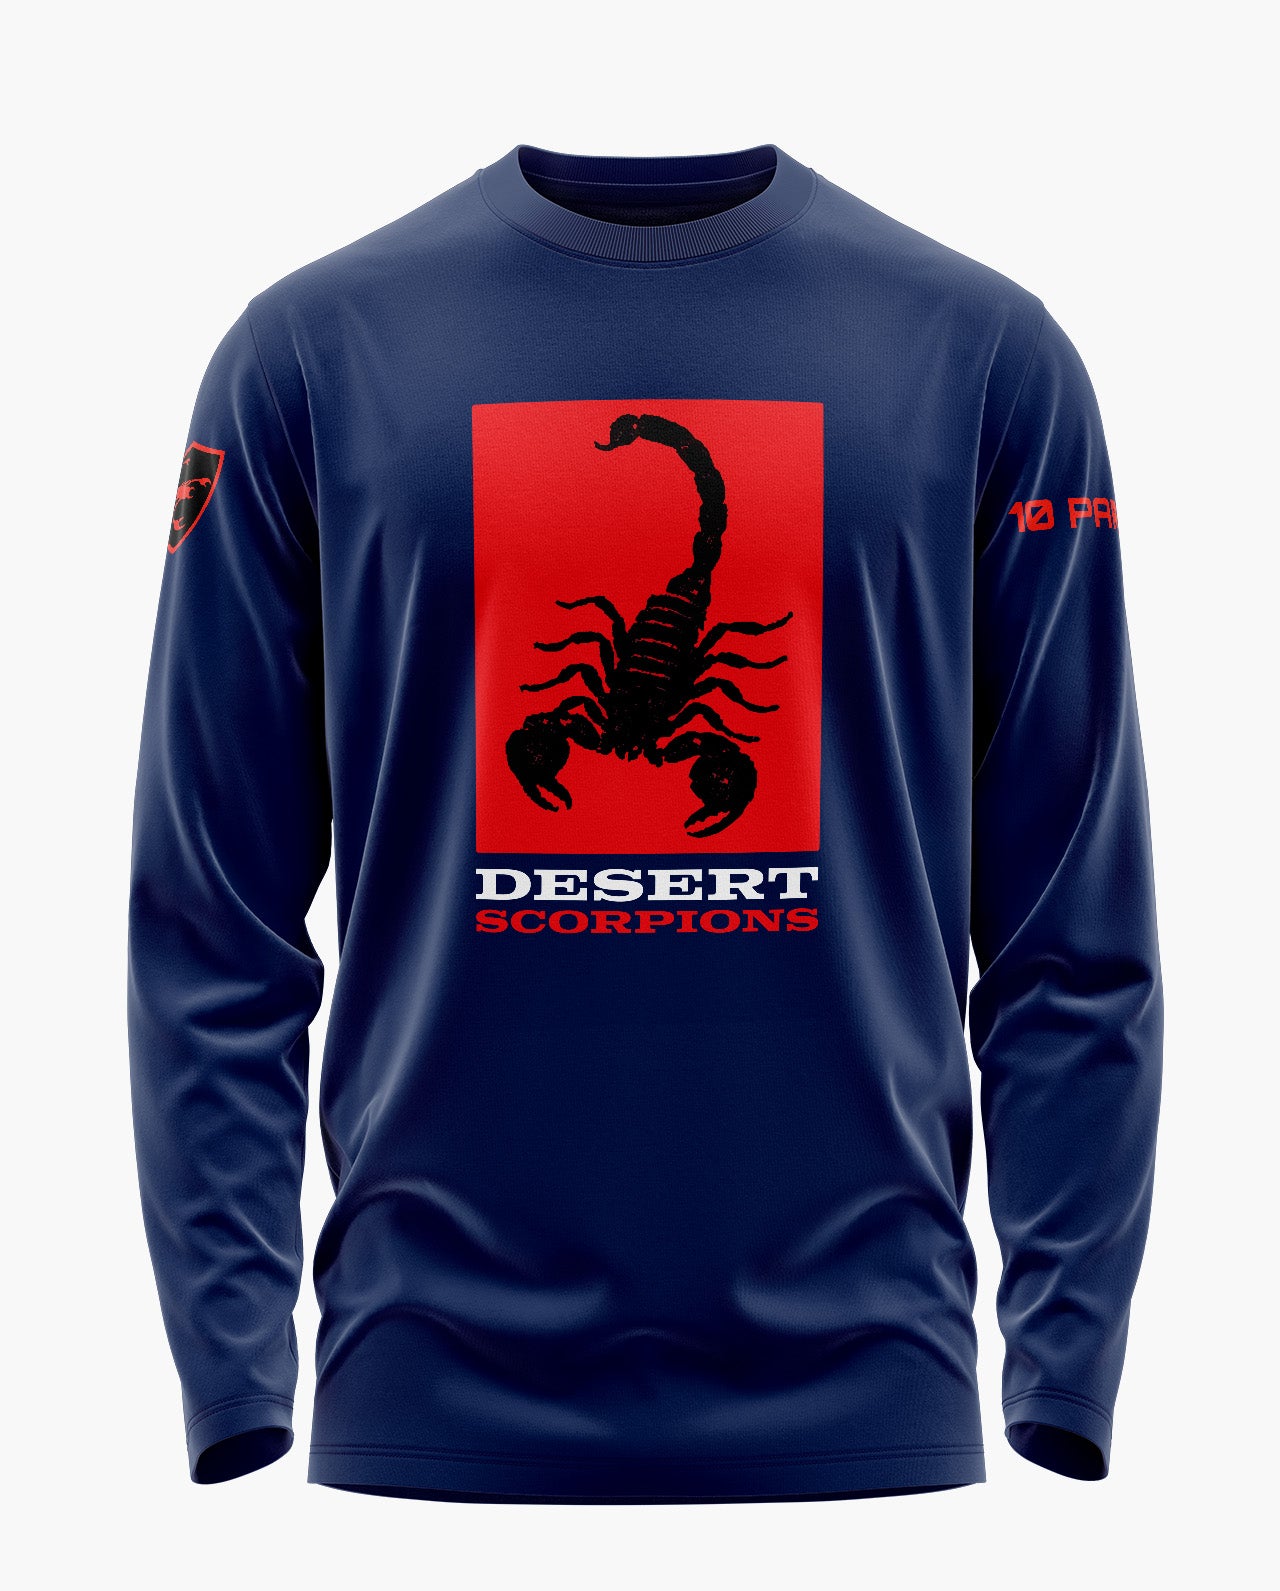 DESERT SCORPIONS-10 PARA SF Full Sleeve T-Shirt